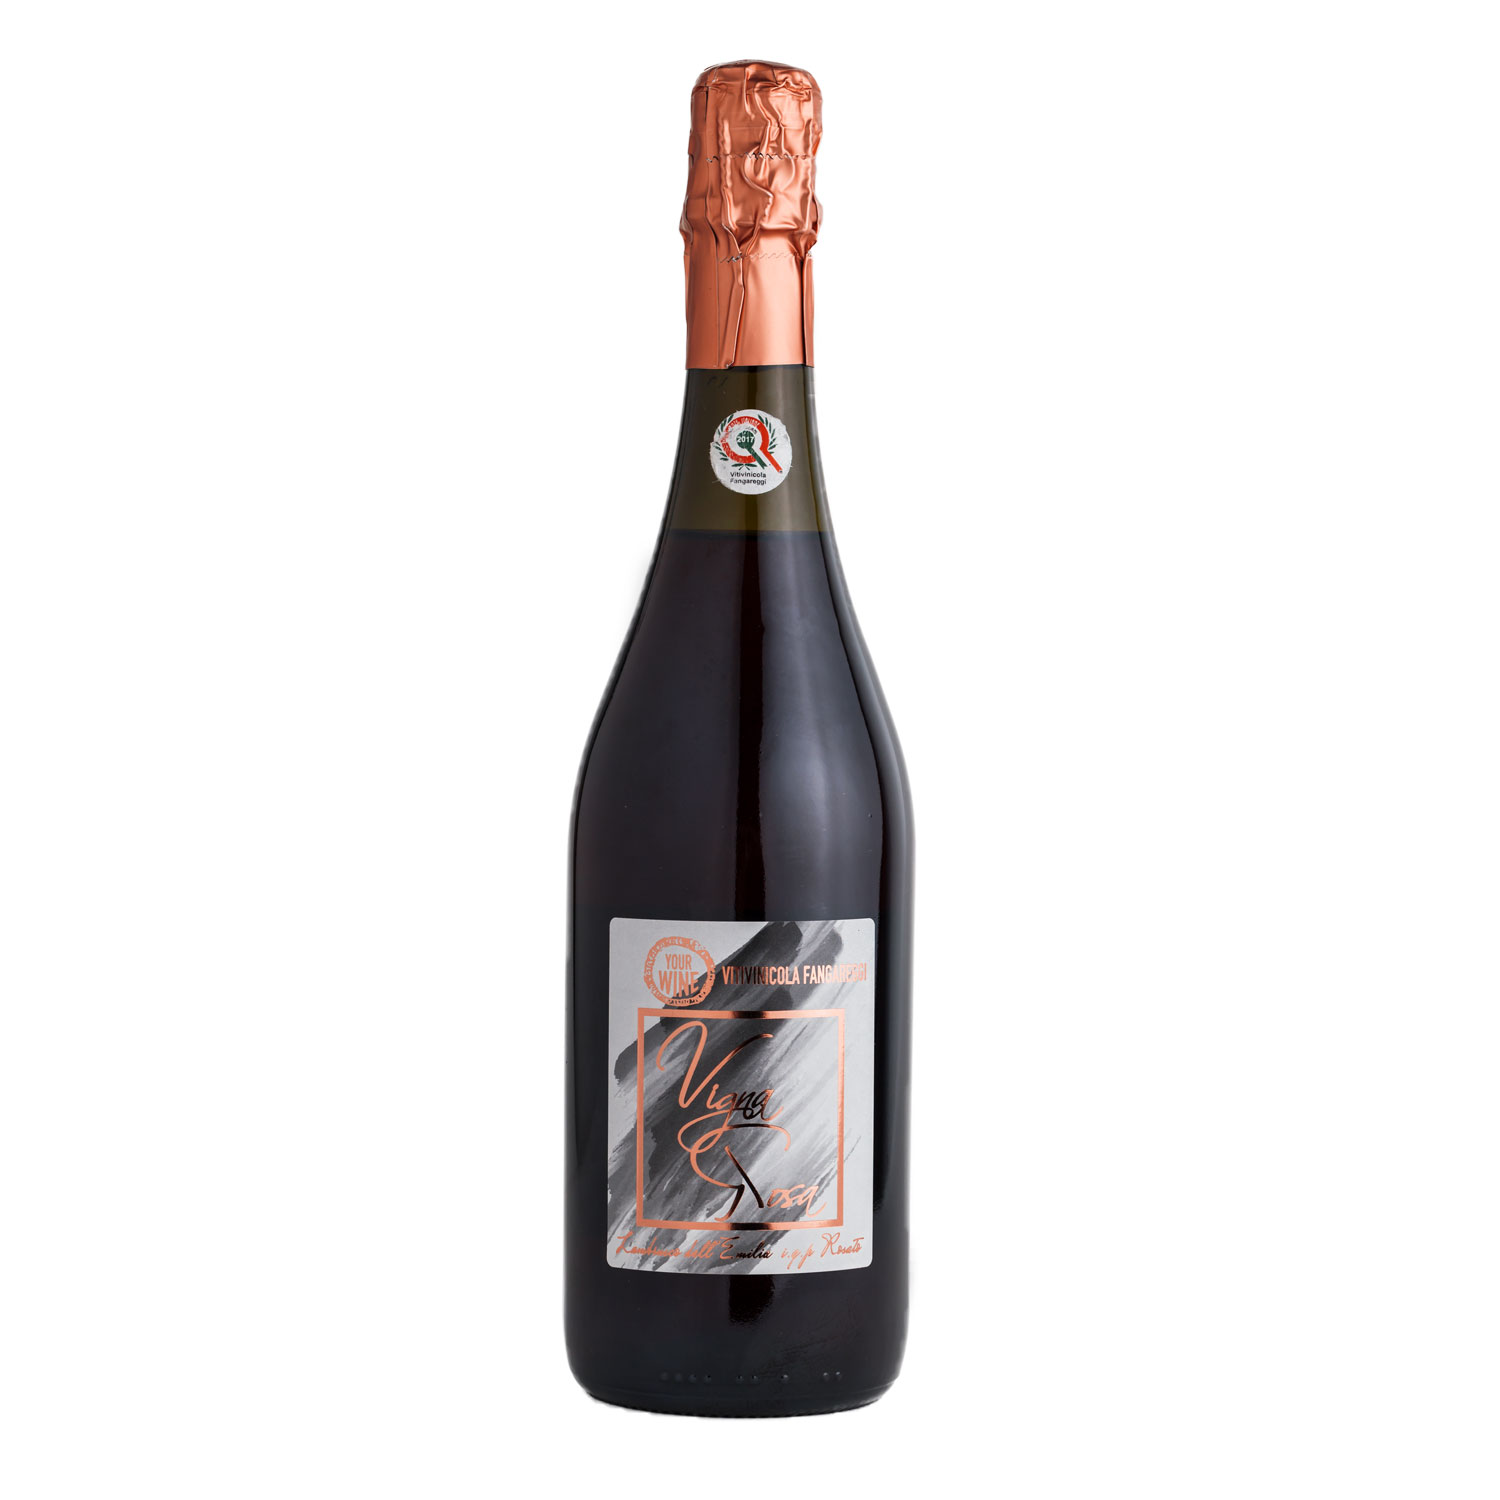 Emilia Lambrusco Rosato IGP “Vigna Rosa” - Vitivinicola Fangareggi, Your Wine